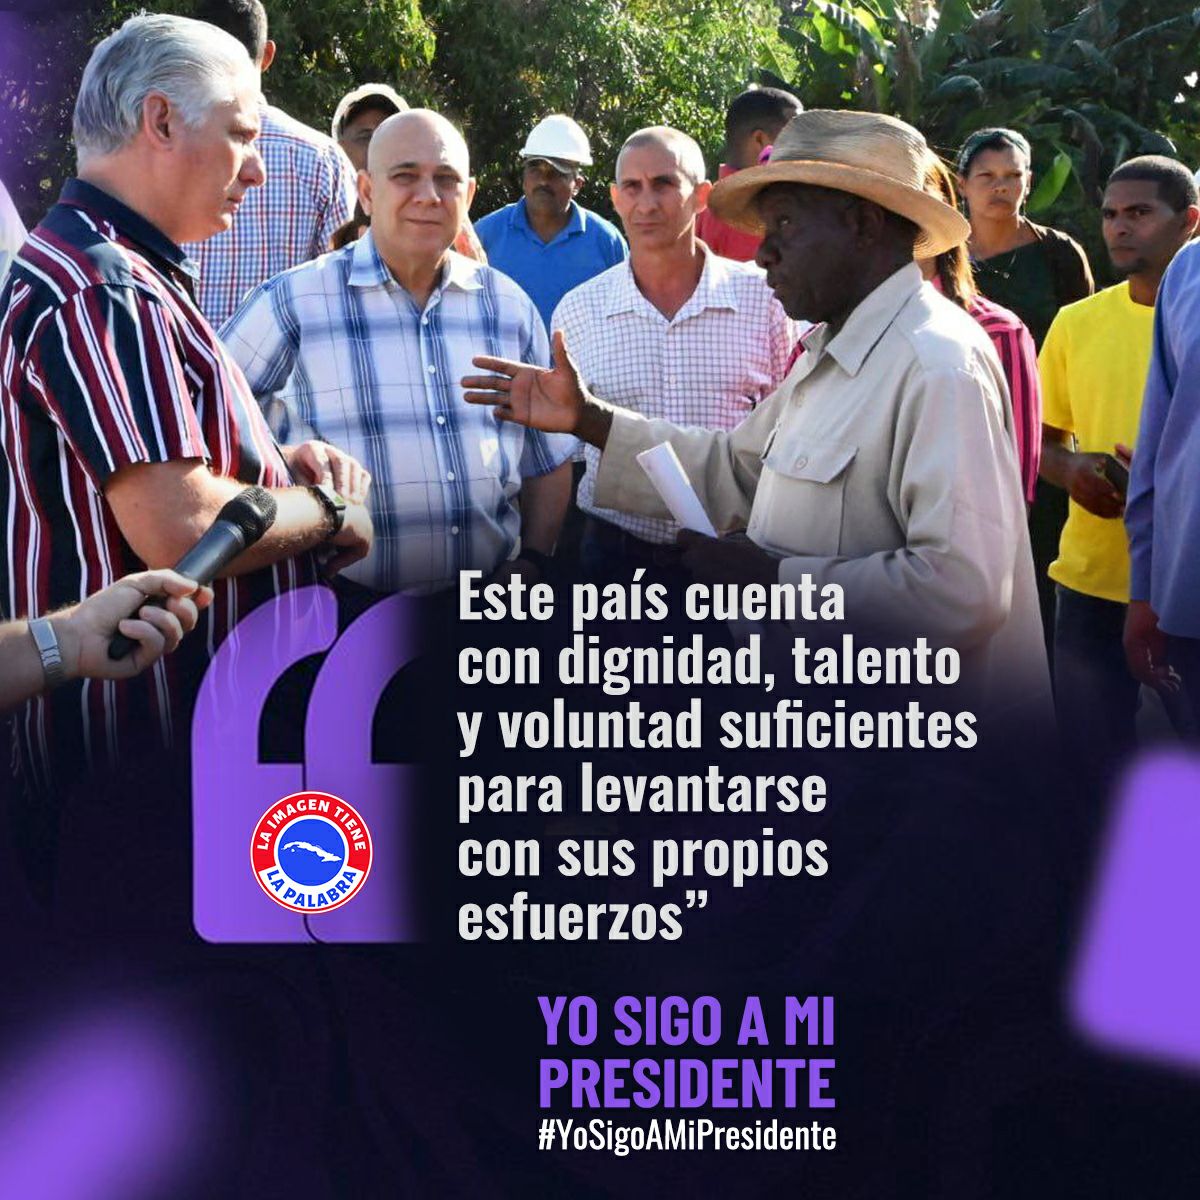 #YoSigoAMiPresidente 
#AbajoElBloqueoContraCuba
#VivaCubaSocialista